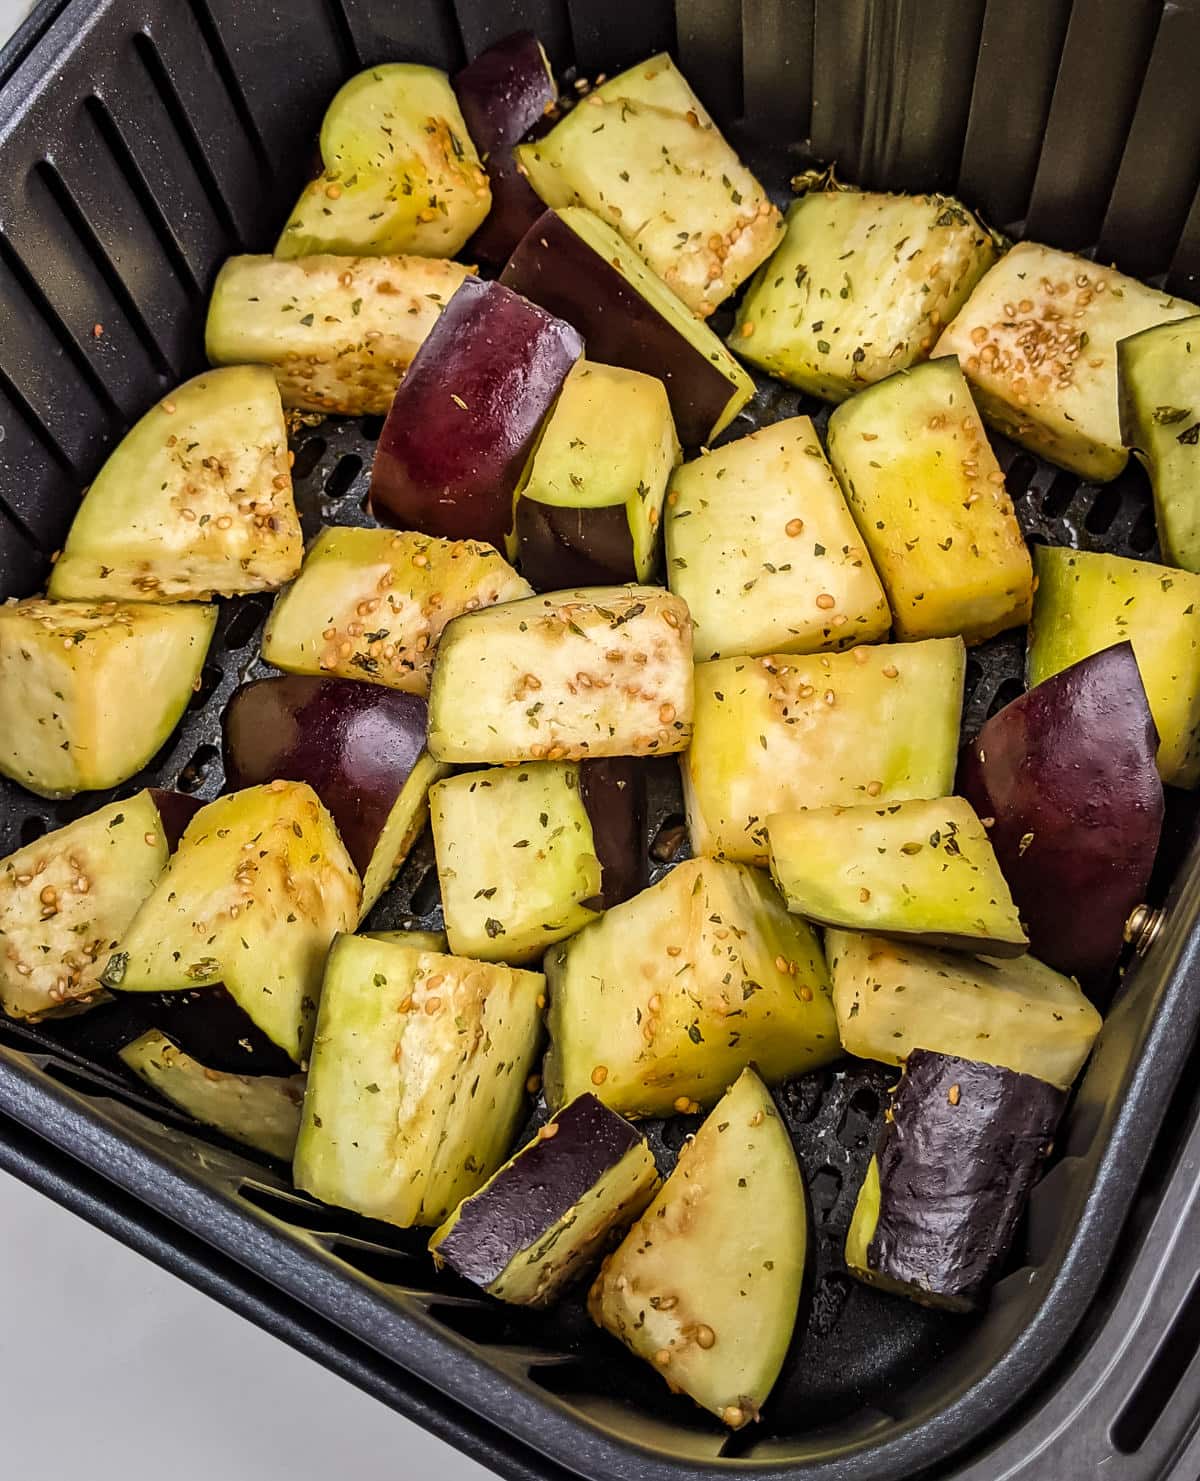 Raw eggplant bites seasoned with oregano and olive oil.